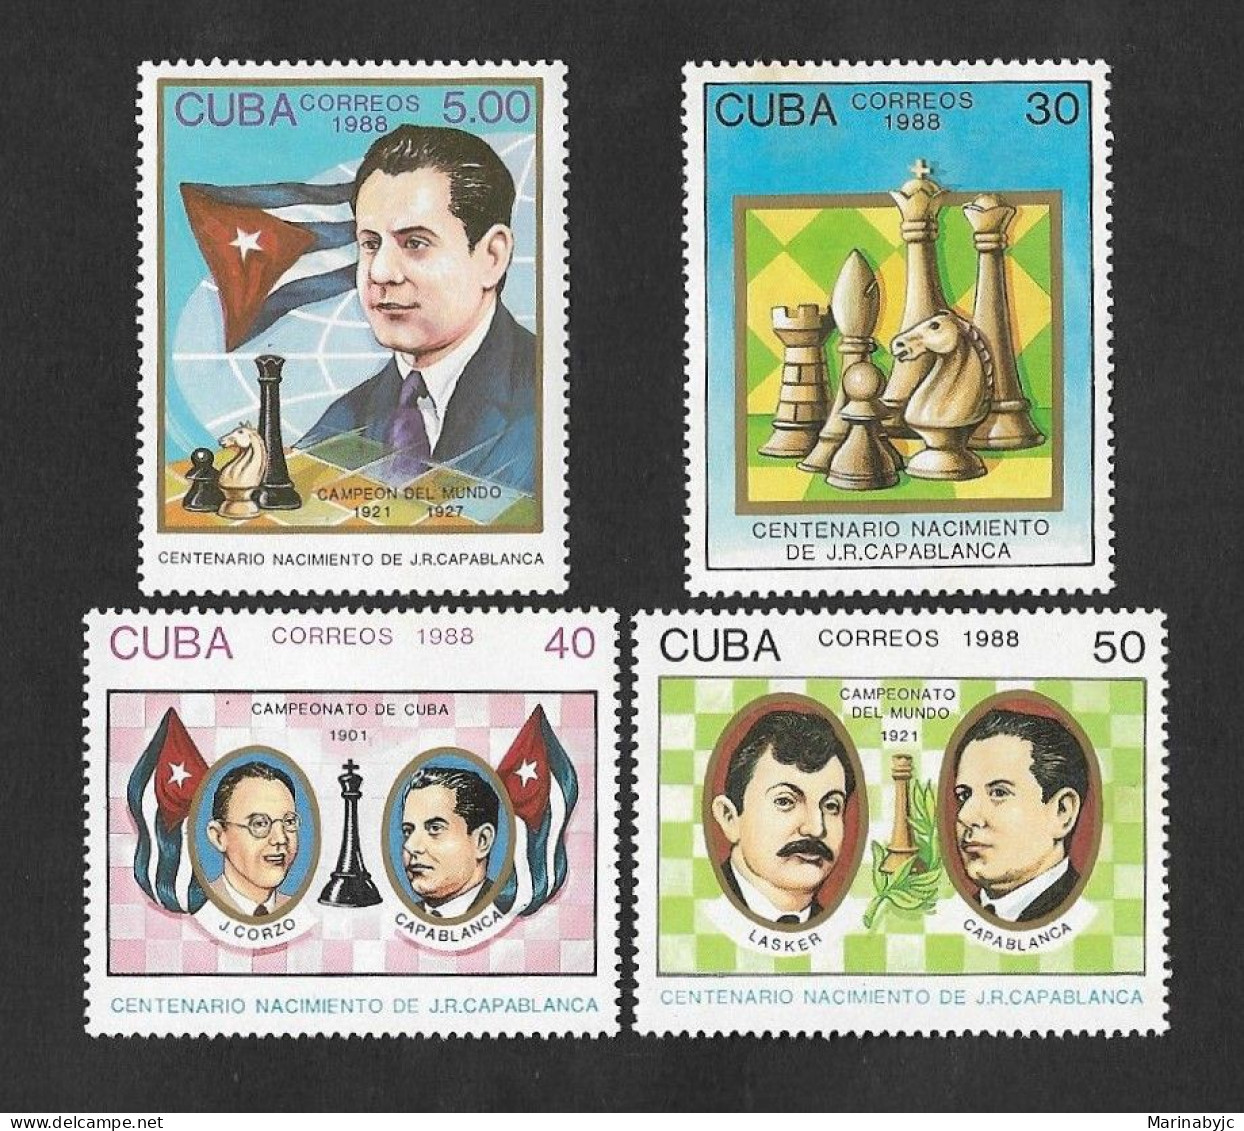 SE)1988 CUBA, CHESS, CENTENARY OF THE BIRTH OF JOSÉ RAÚL CAPABLANCA, WORLD CHAMPION, WORLD CHAMPION IN 1921, FIGURES, J. - Used Stamps